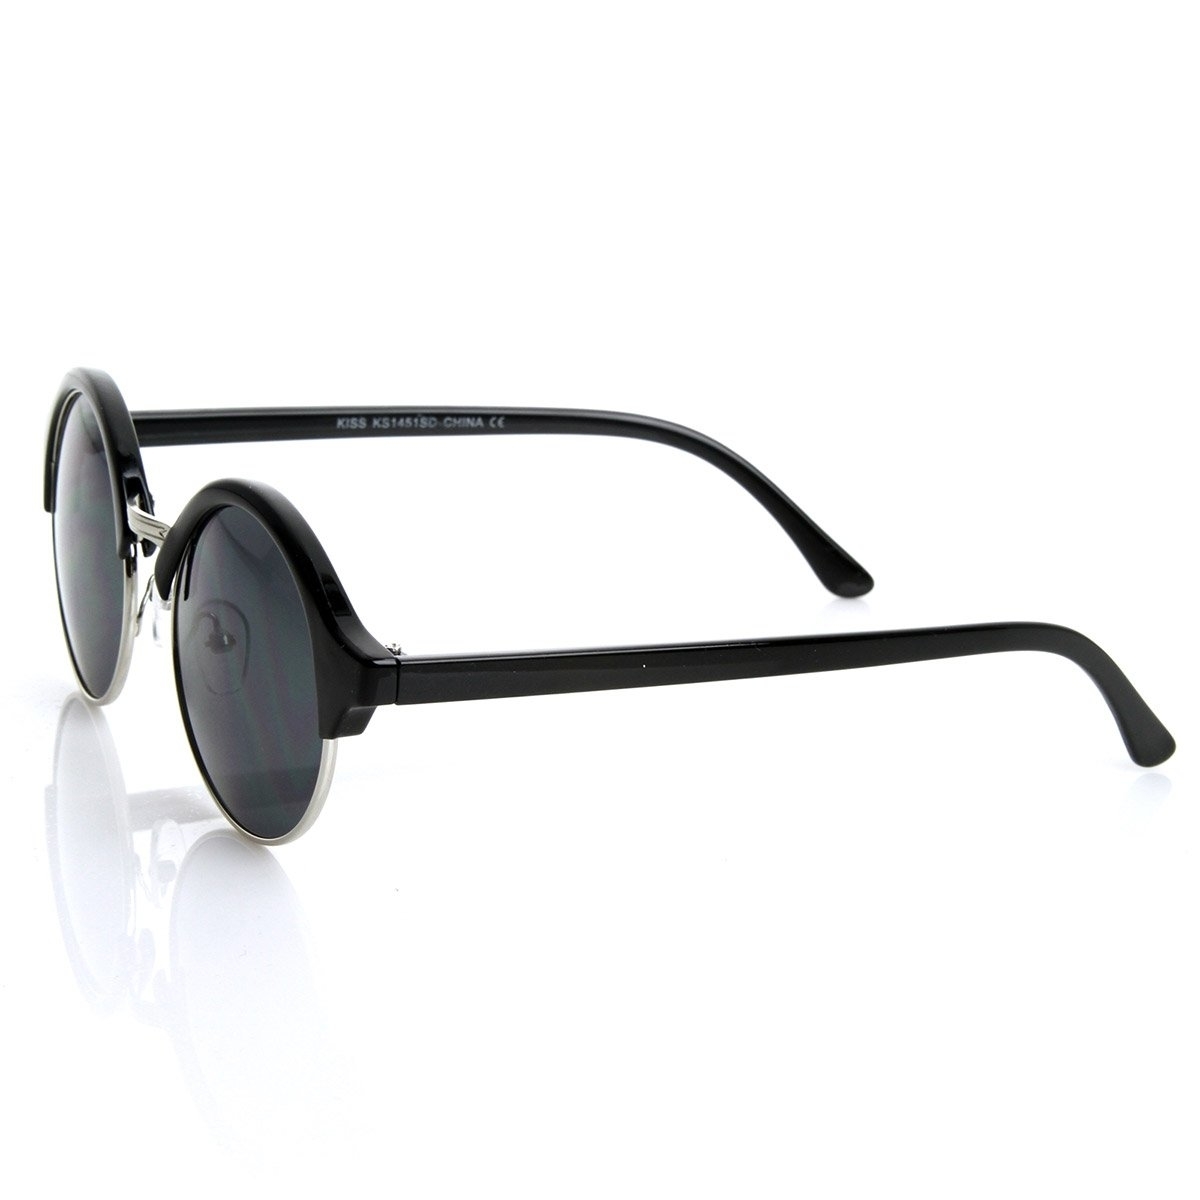 Vintage Inspired Classic Half Frame Semi-Rimless Round Circle Sunglasses - Black-Gold Lavender